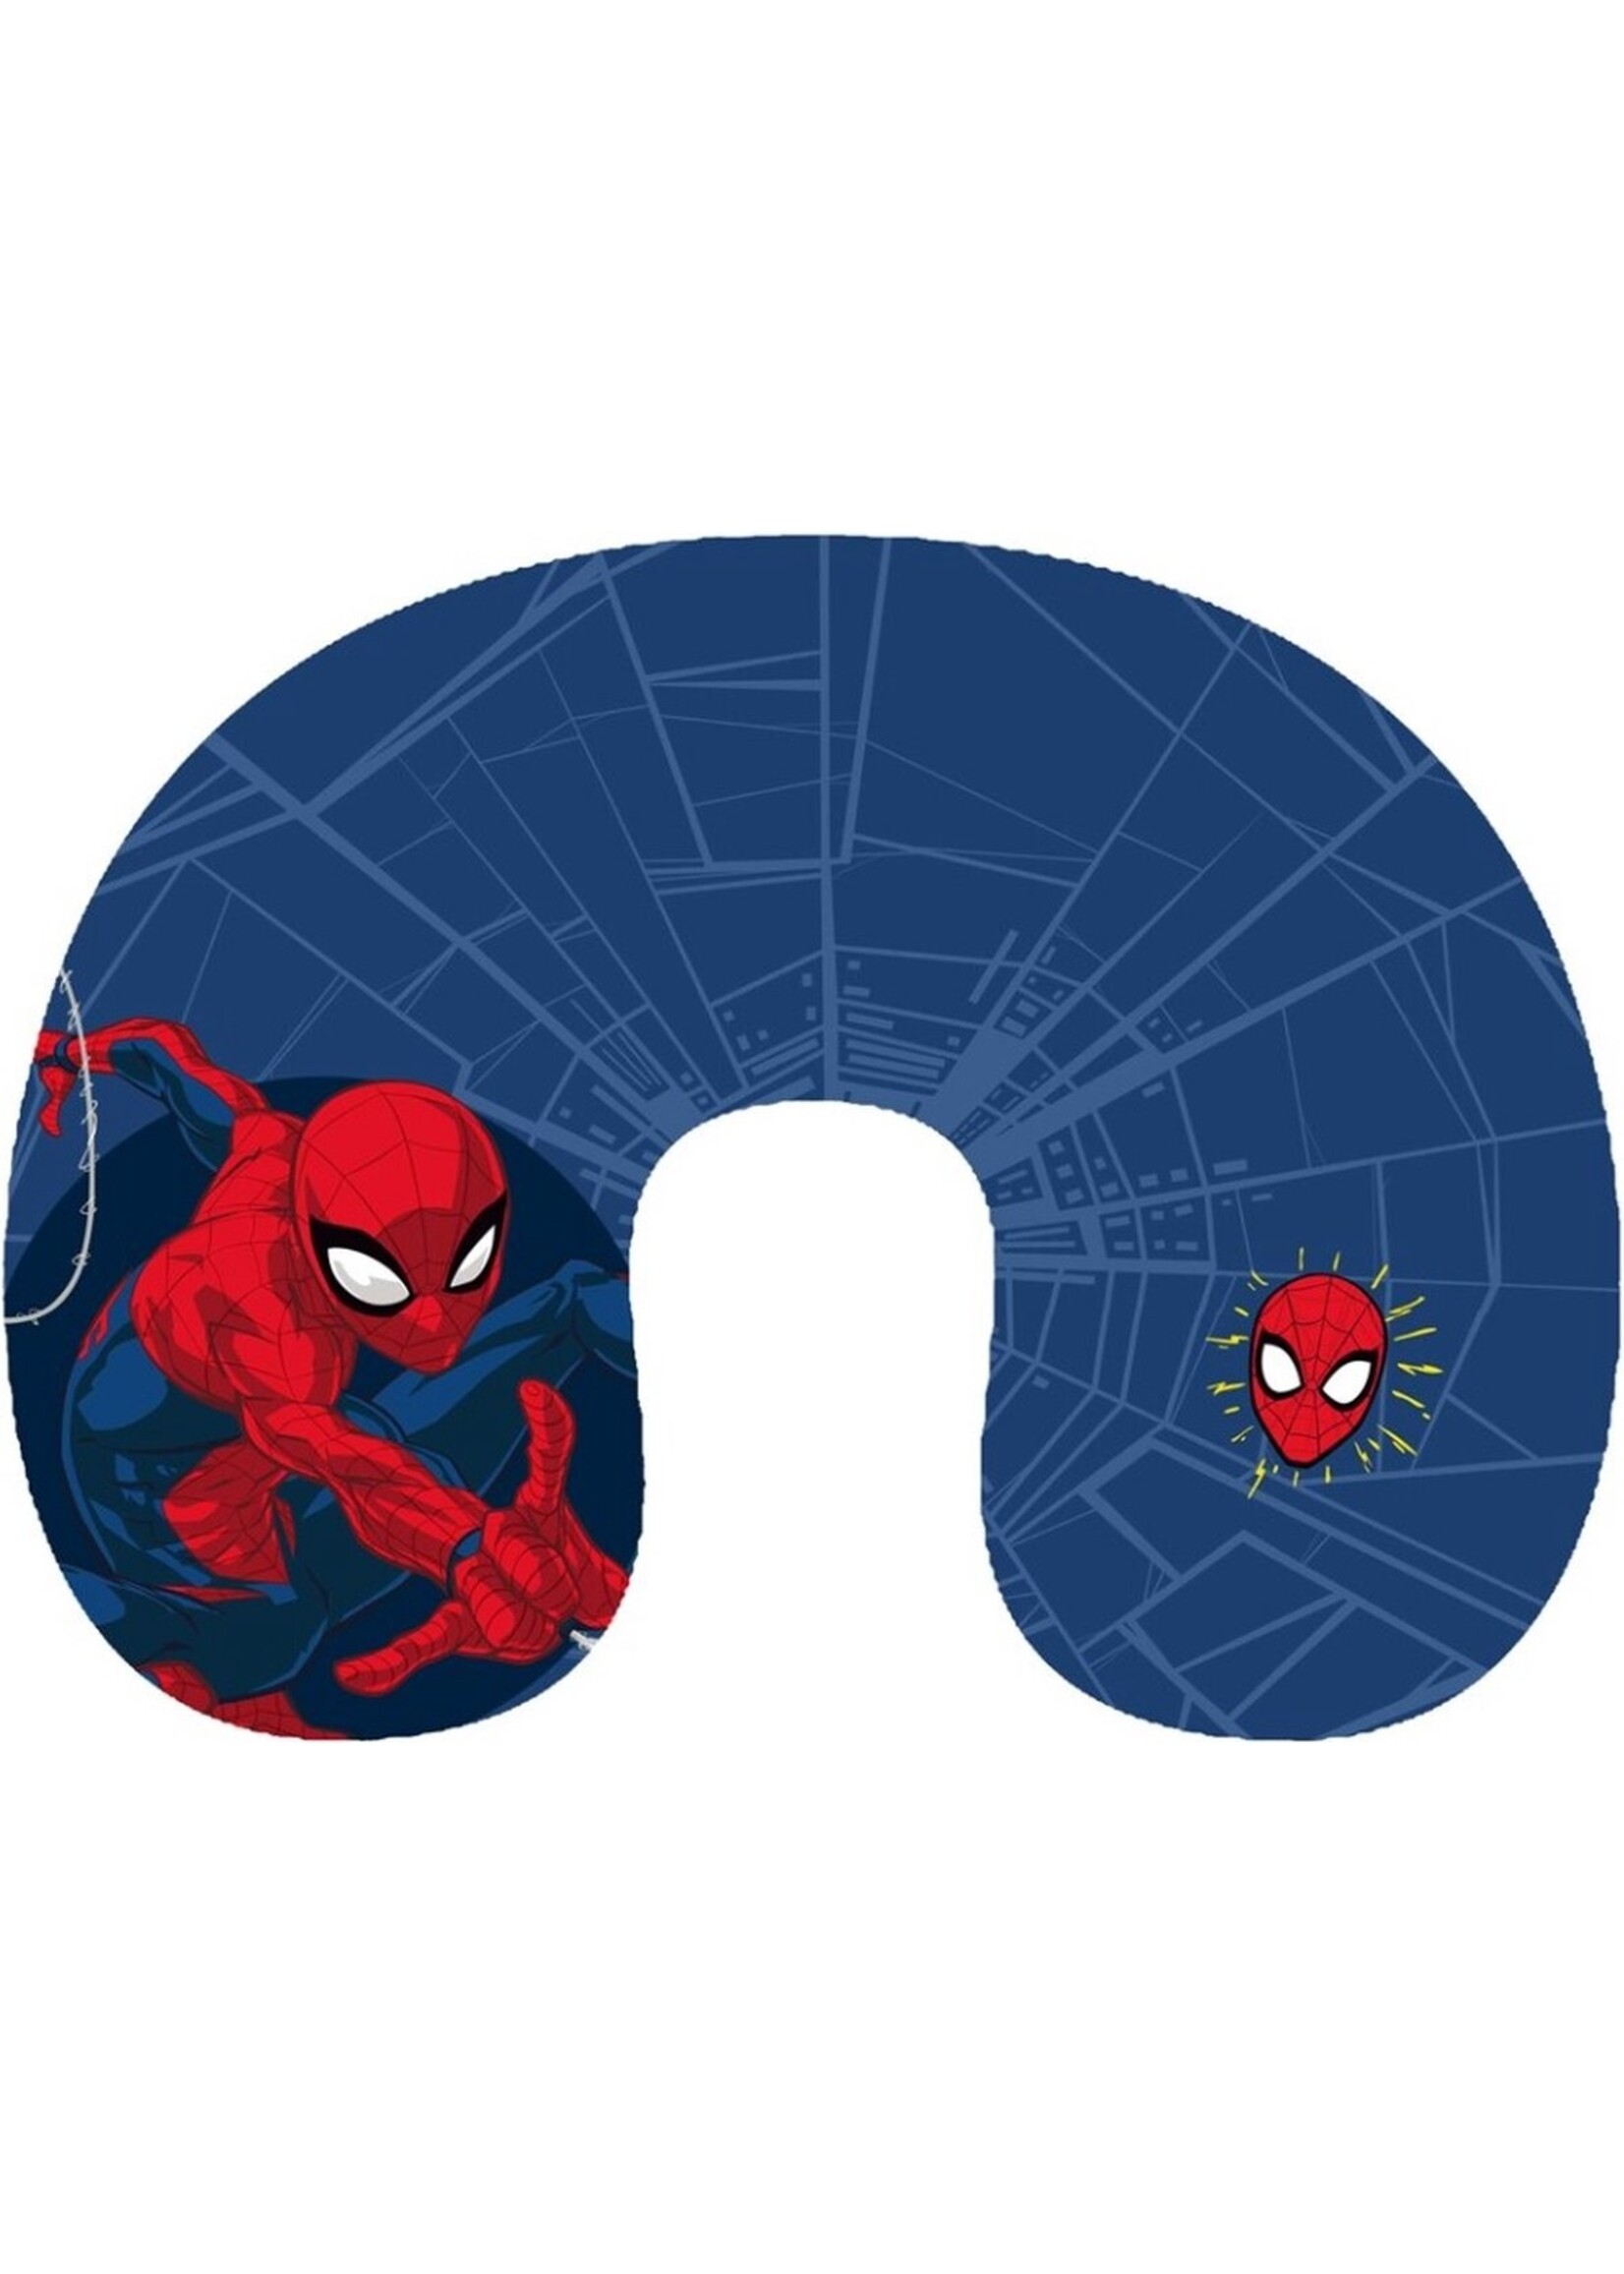 Spiderman Travel cushion